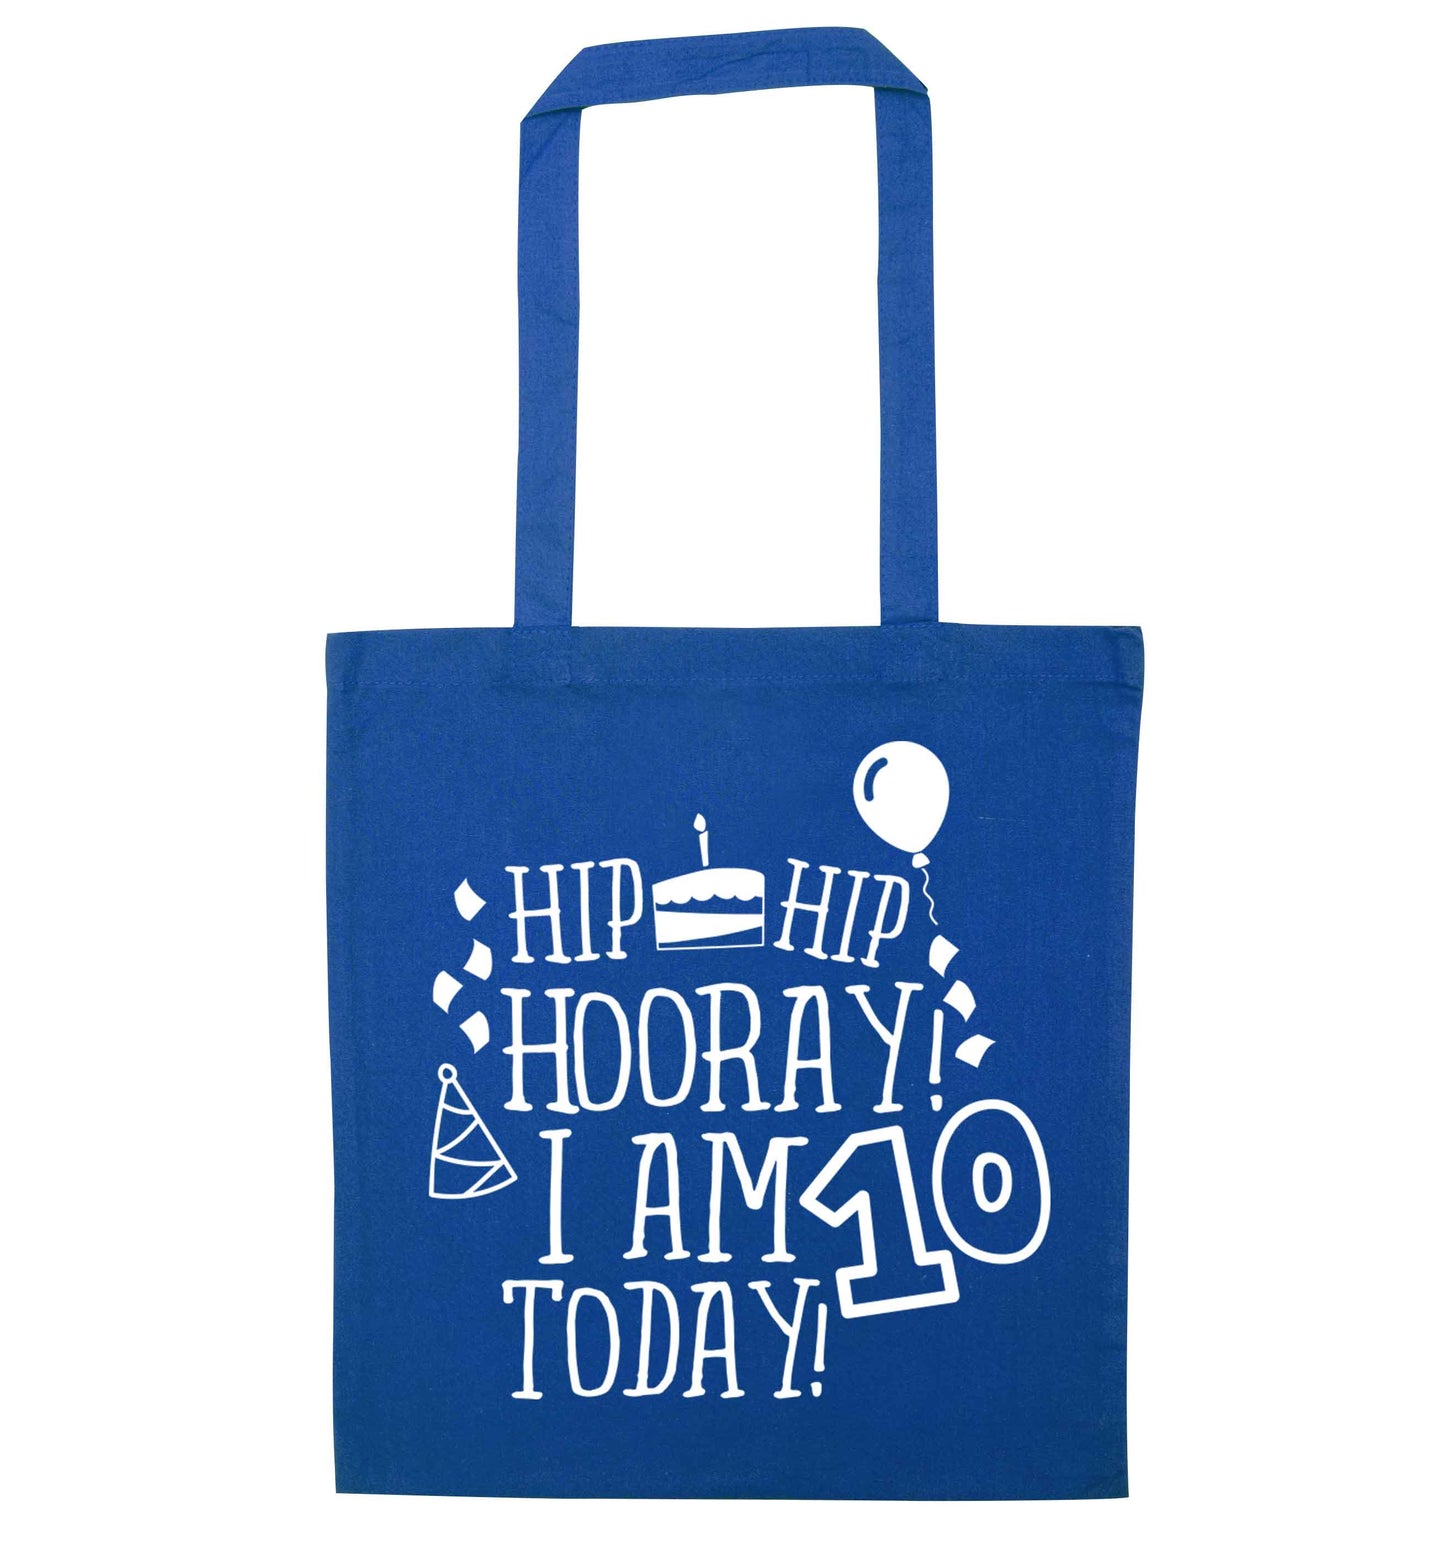 Hip hip hooray I am ten today! blue tote bag